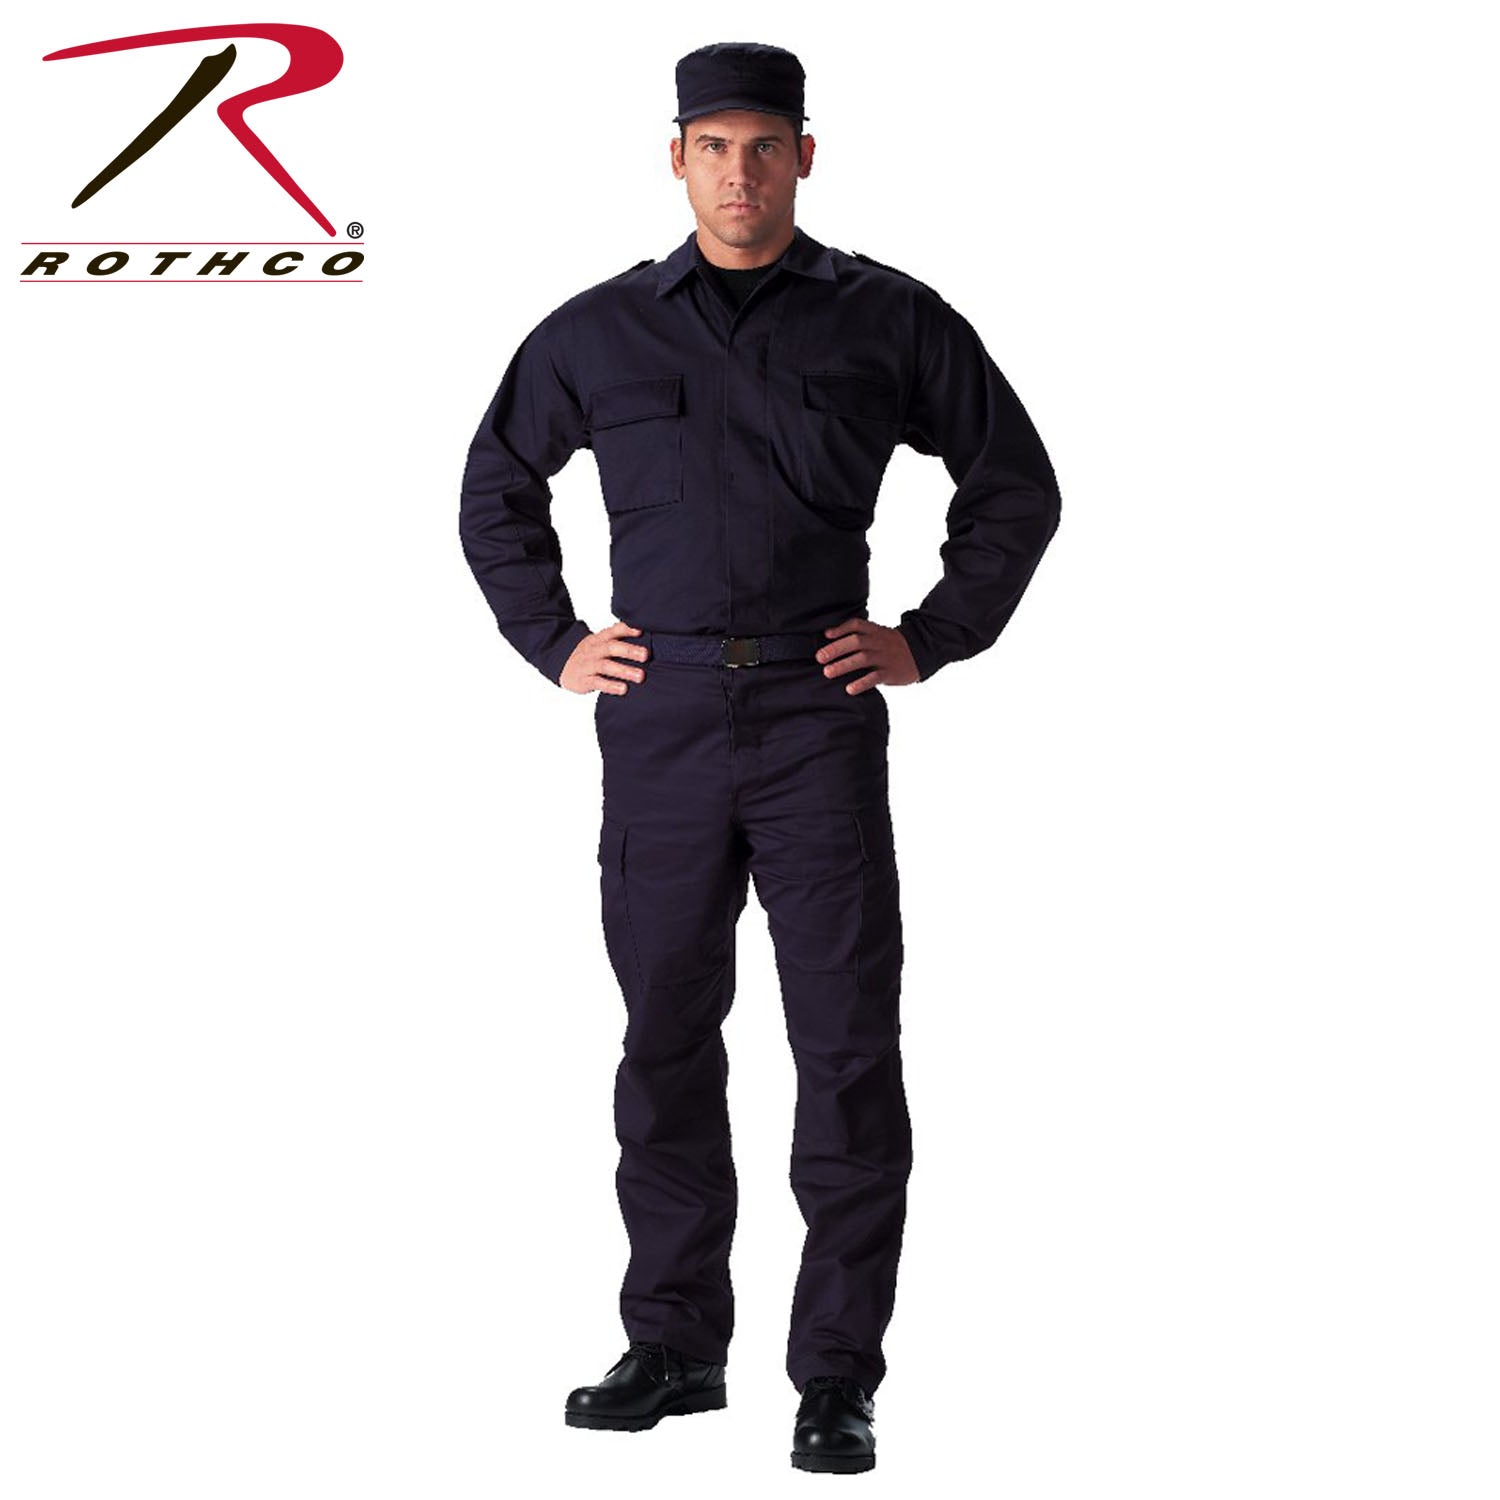 Rothco Tactical 2 Pocket BDU (Battle Dress Uniform) Shirt - Tactical Choice Plus